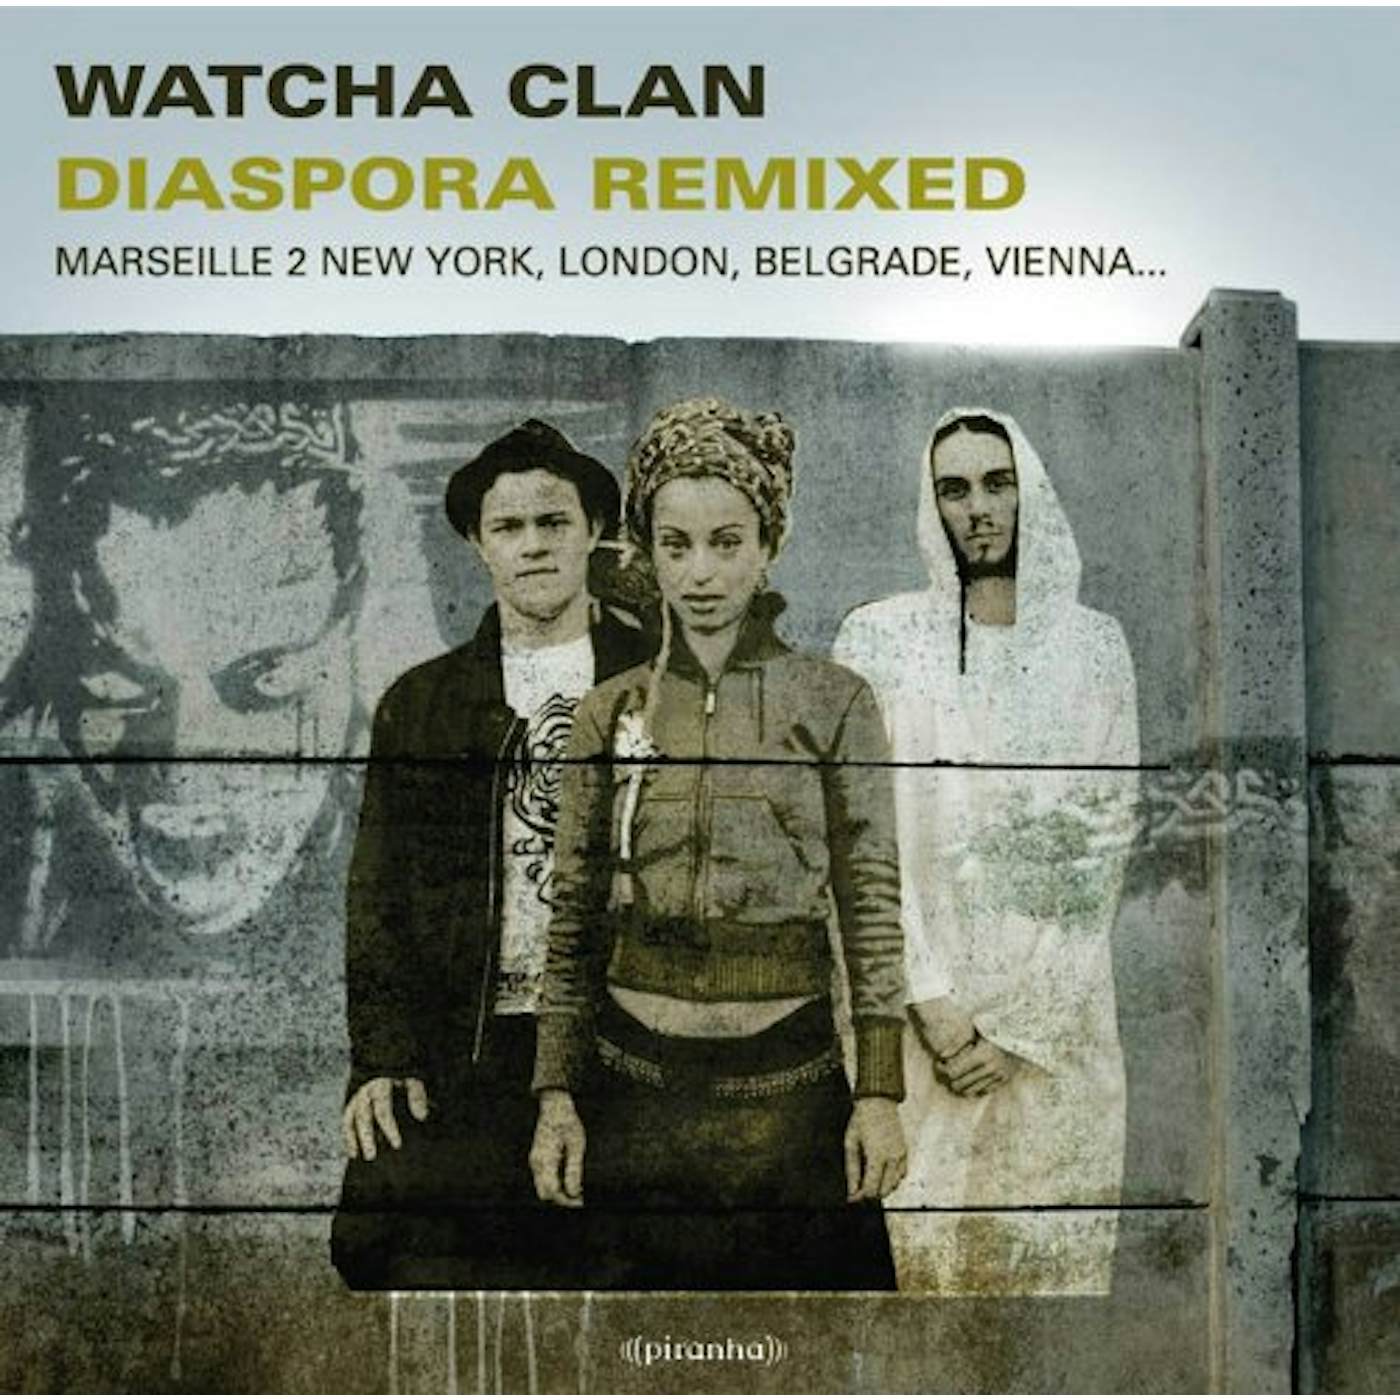 Watcha Clan Diaspora Remixed Vinyl Record